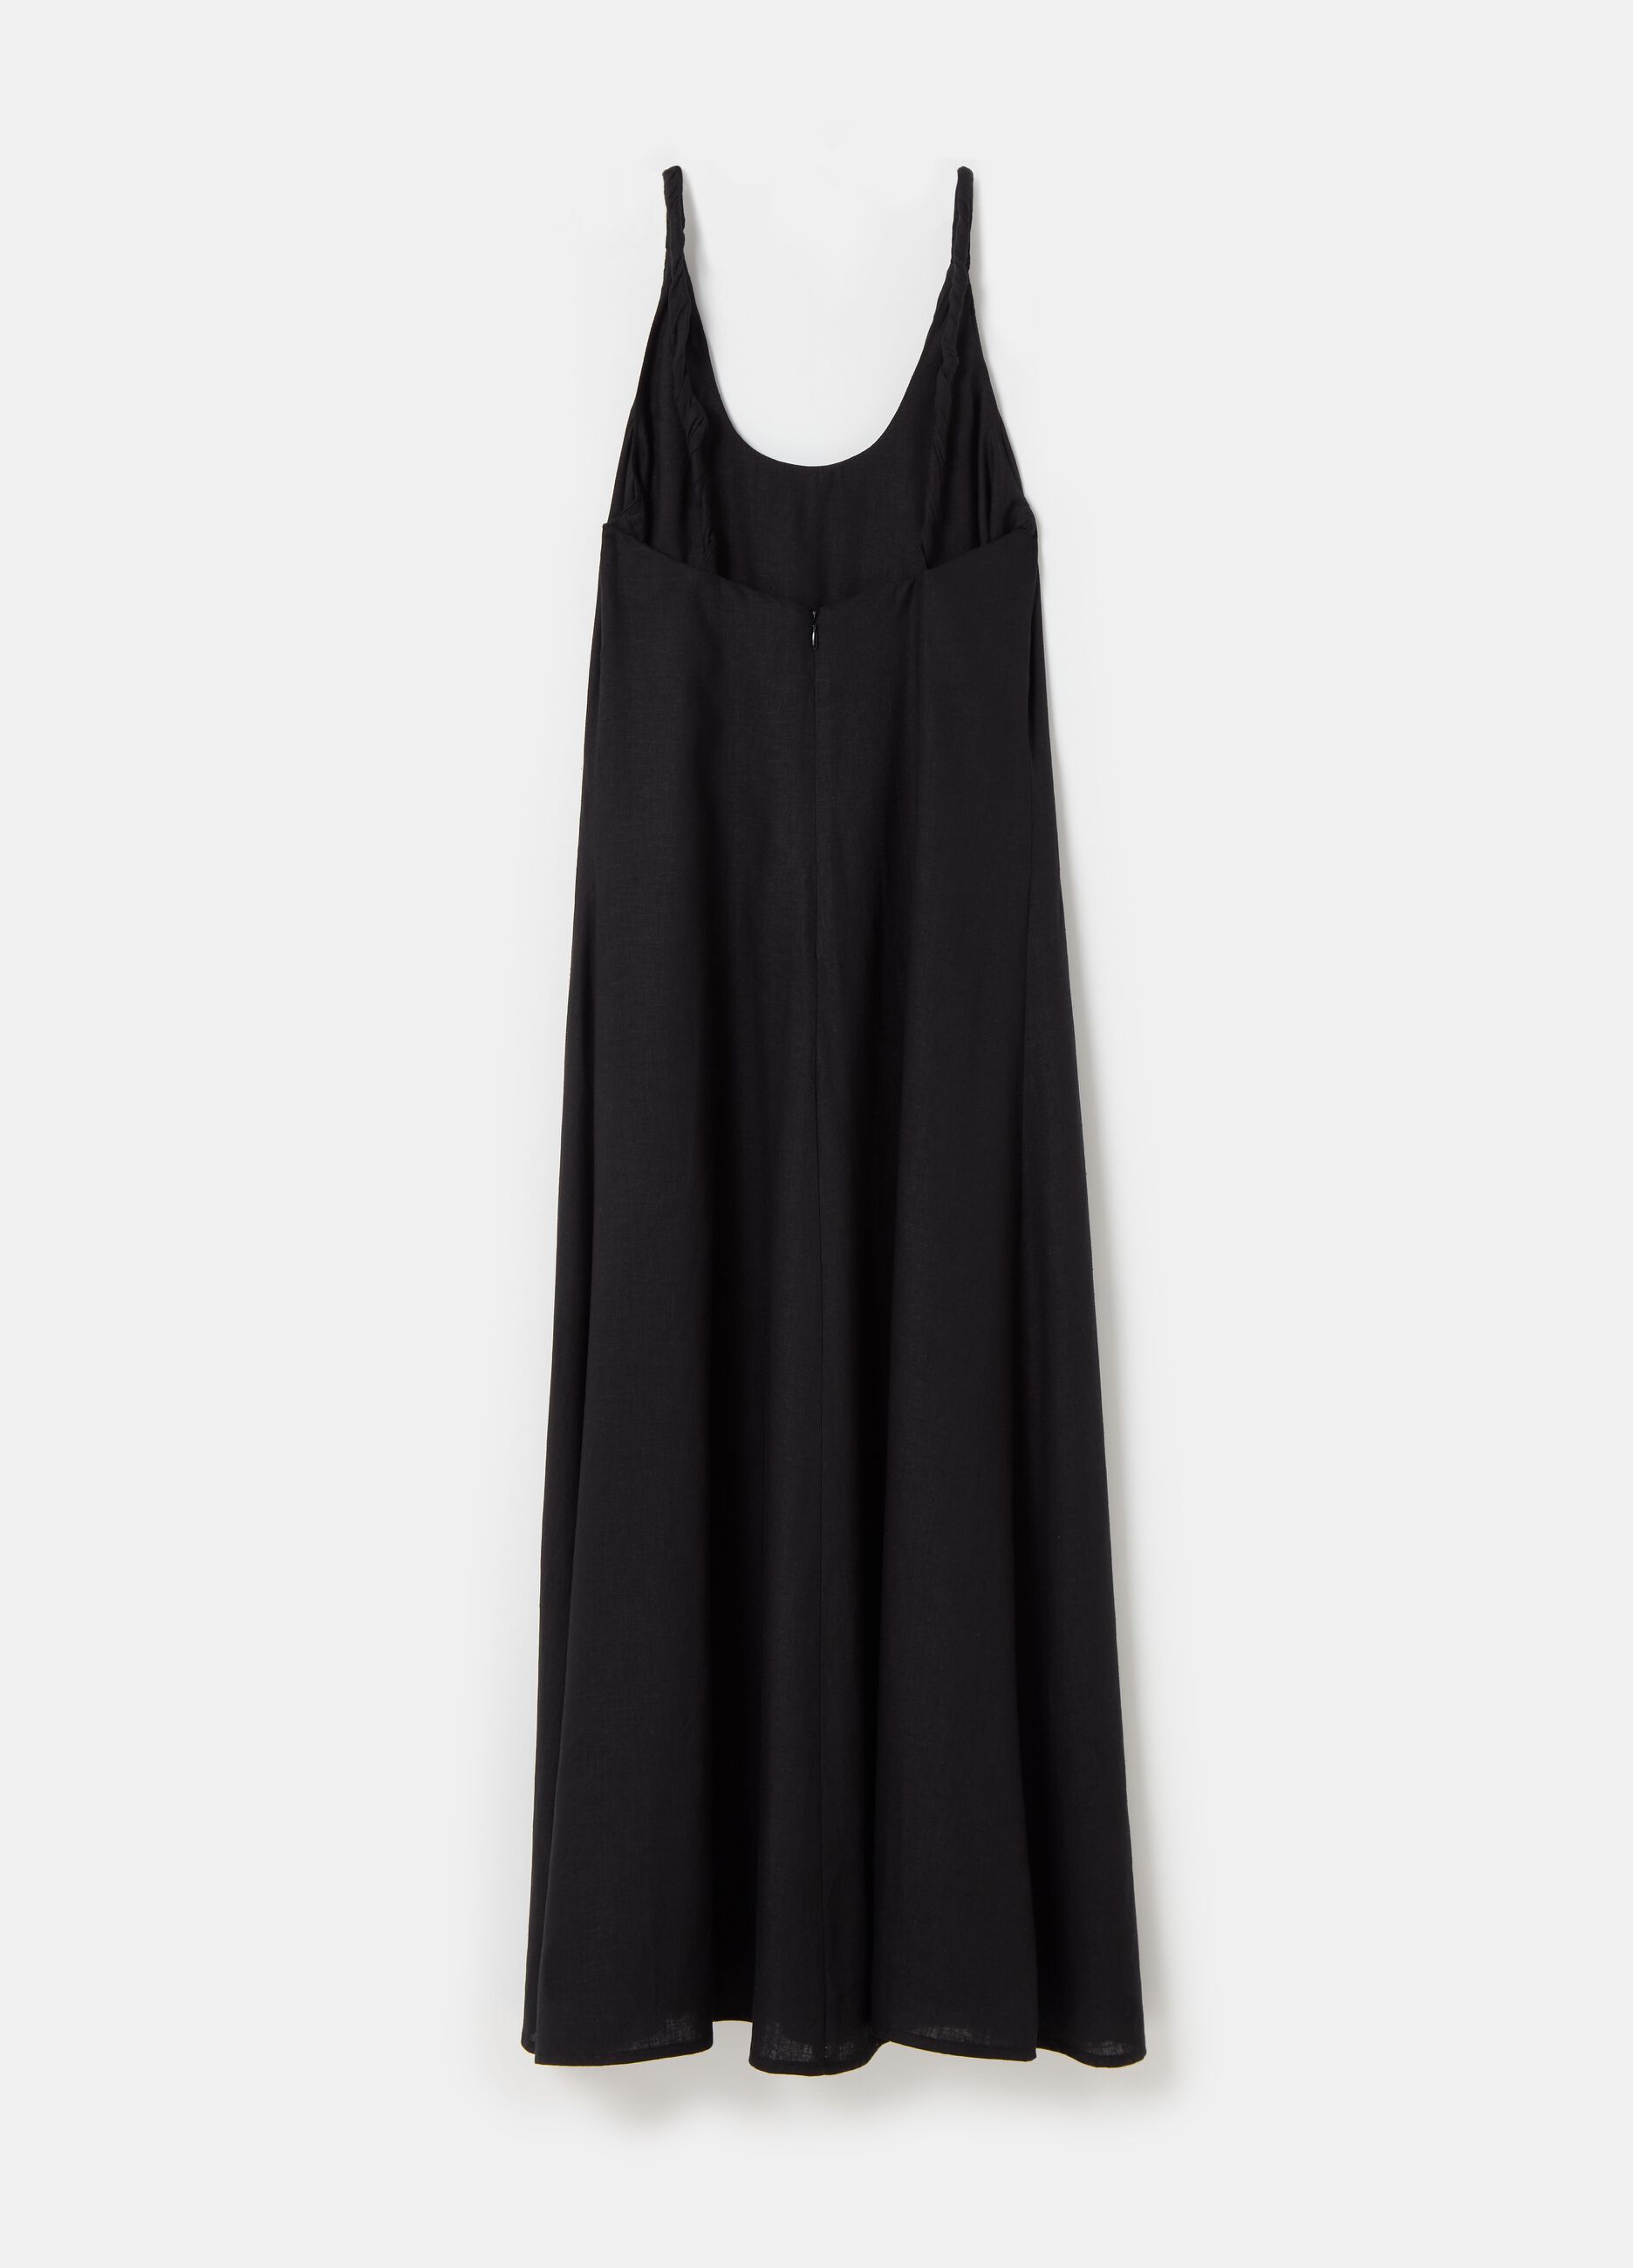 Contemporary long sleeveless dress